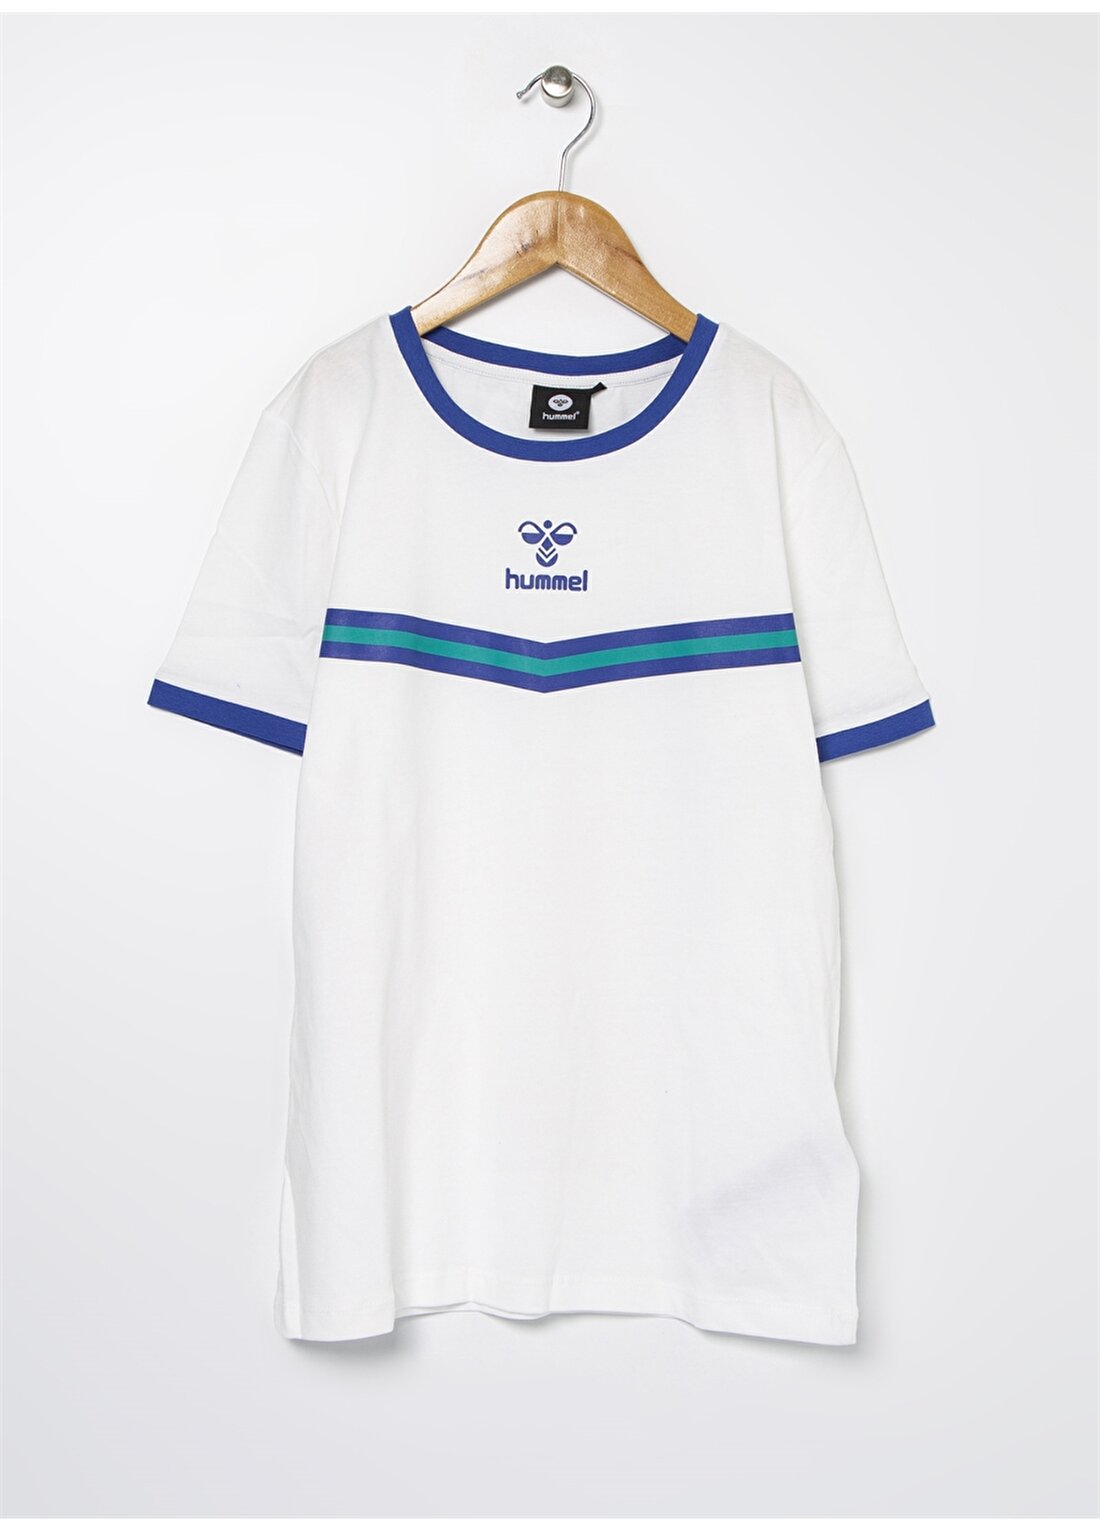 Hummel 910937-9003 Taigo T-Shirt